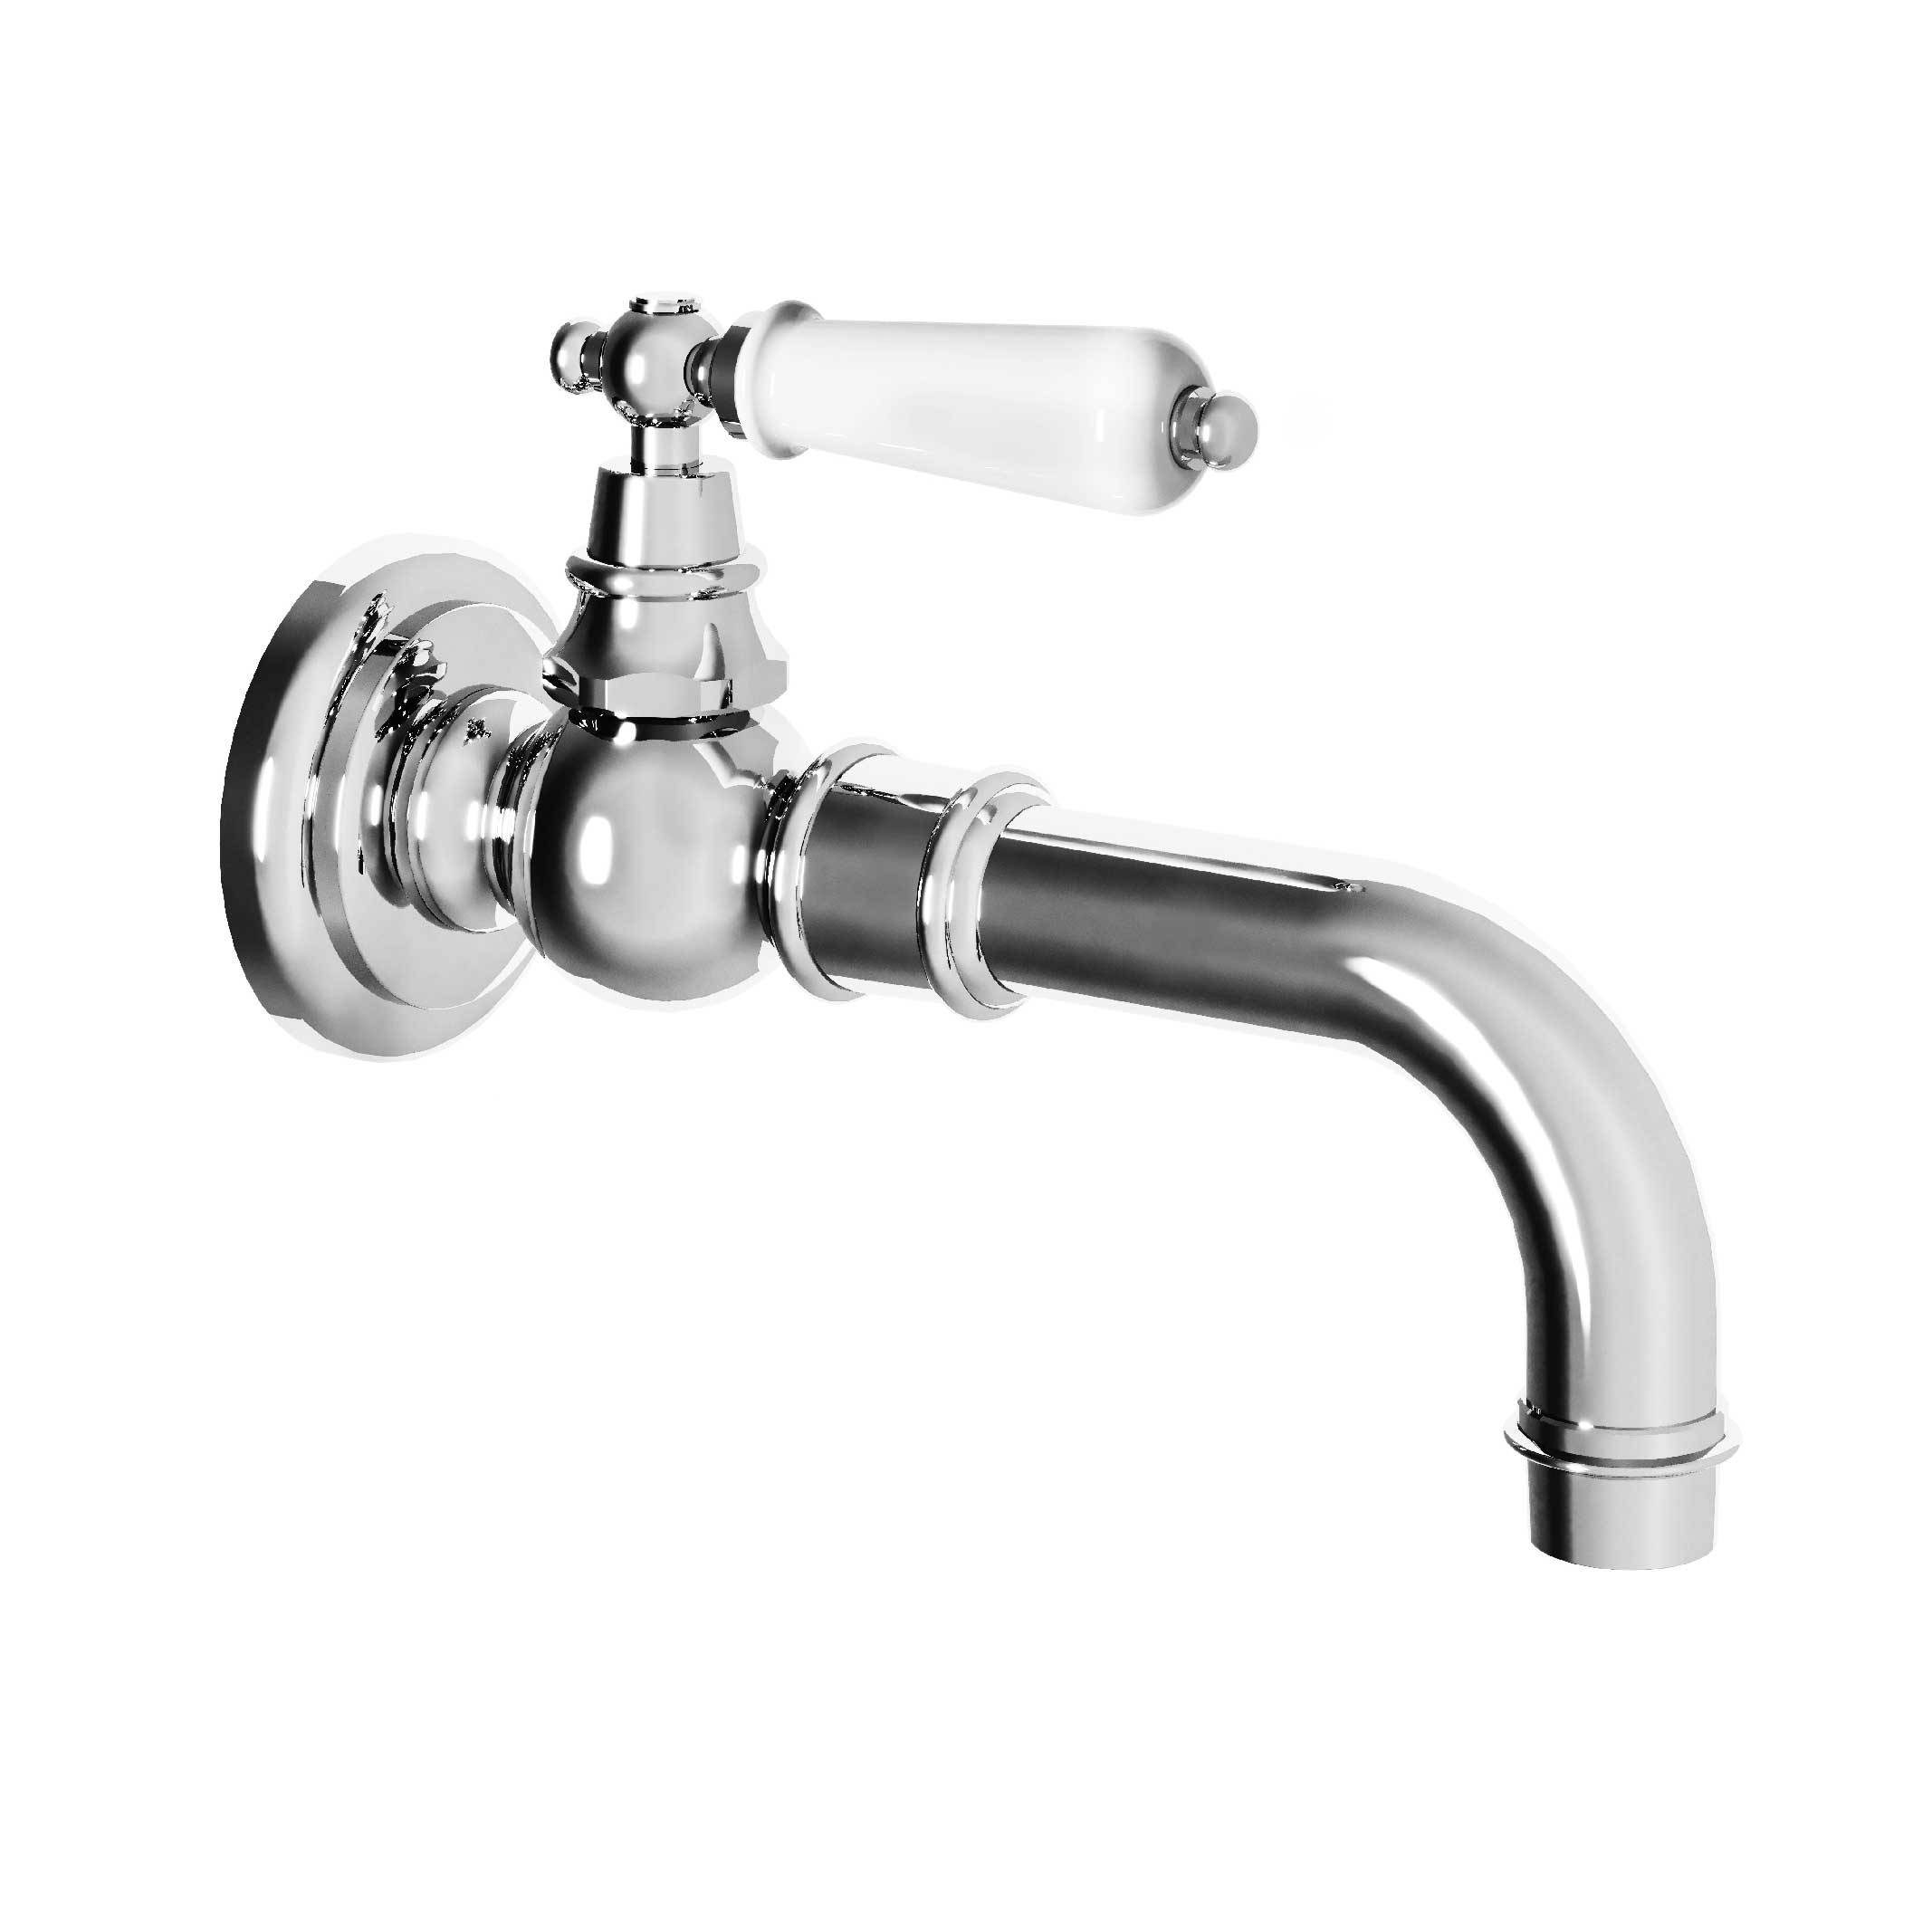 M04-4WS1 Wall mounted wash-hand basin tap